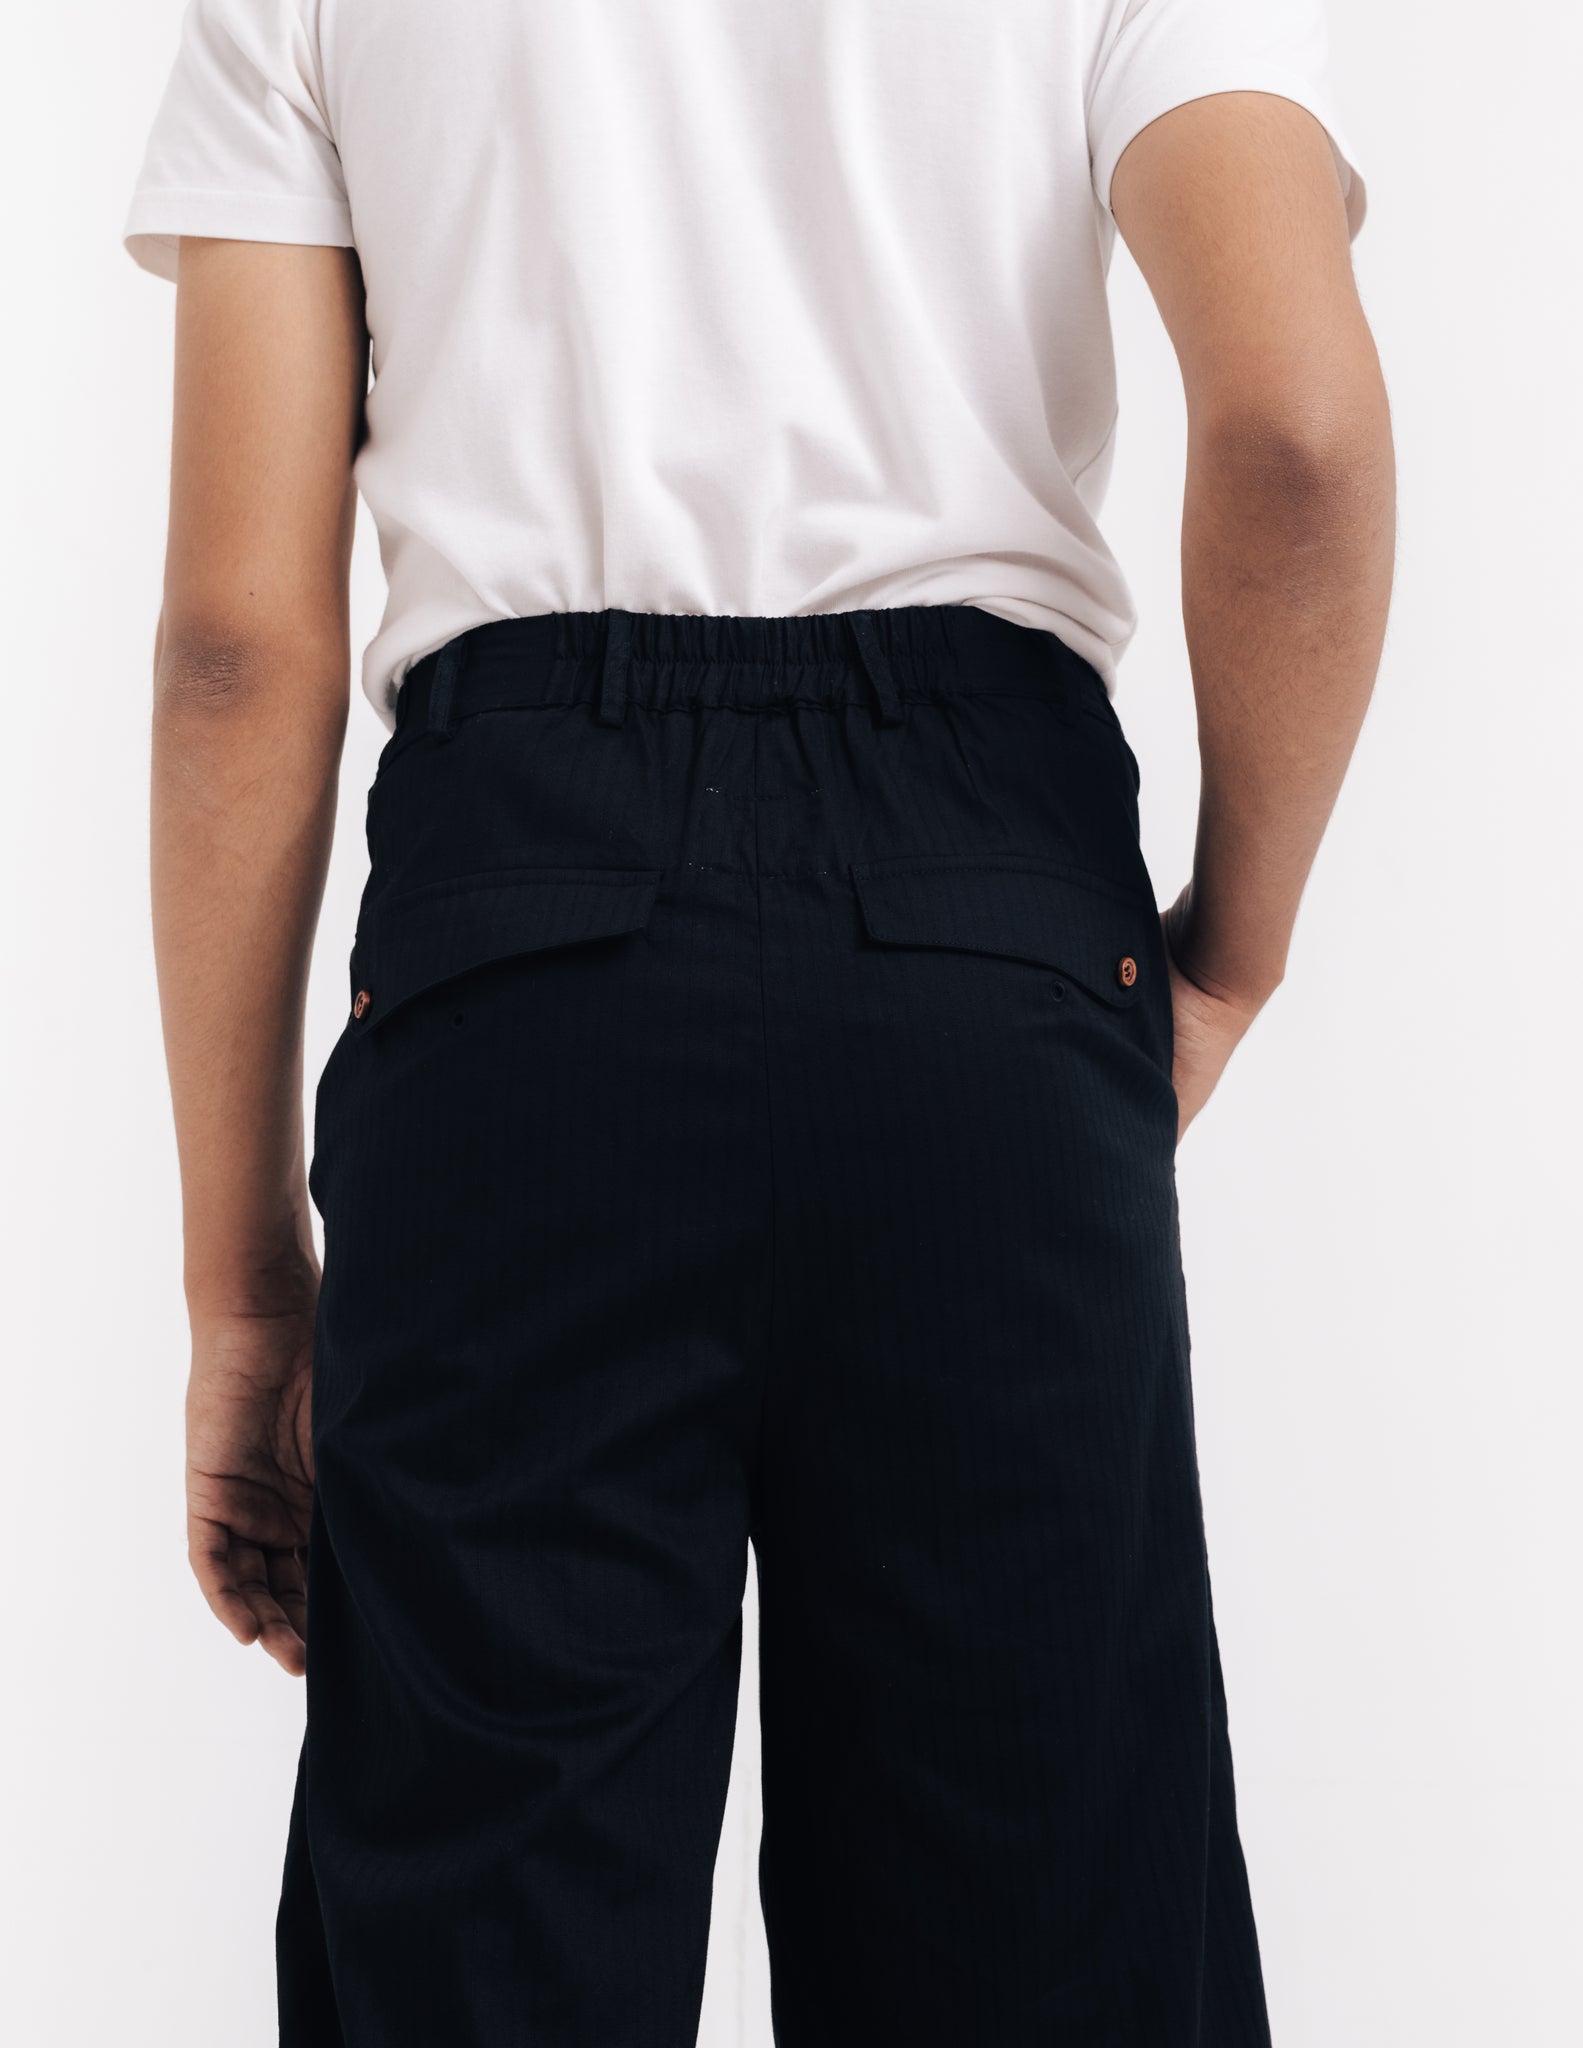 Men: Teladae Buttoned Pants (Black)